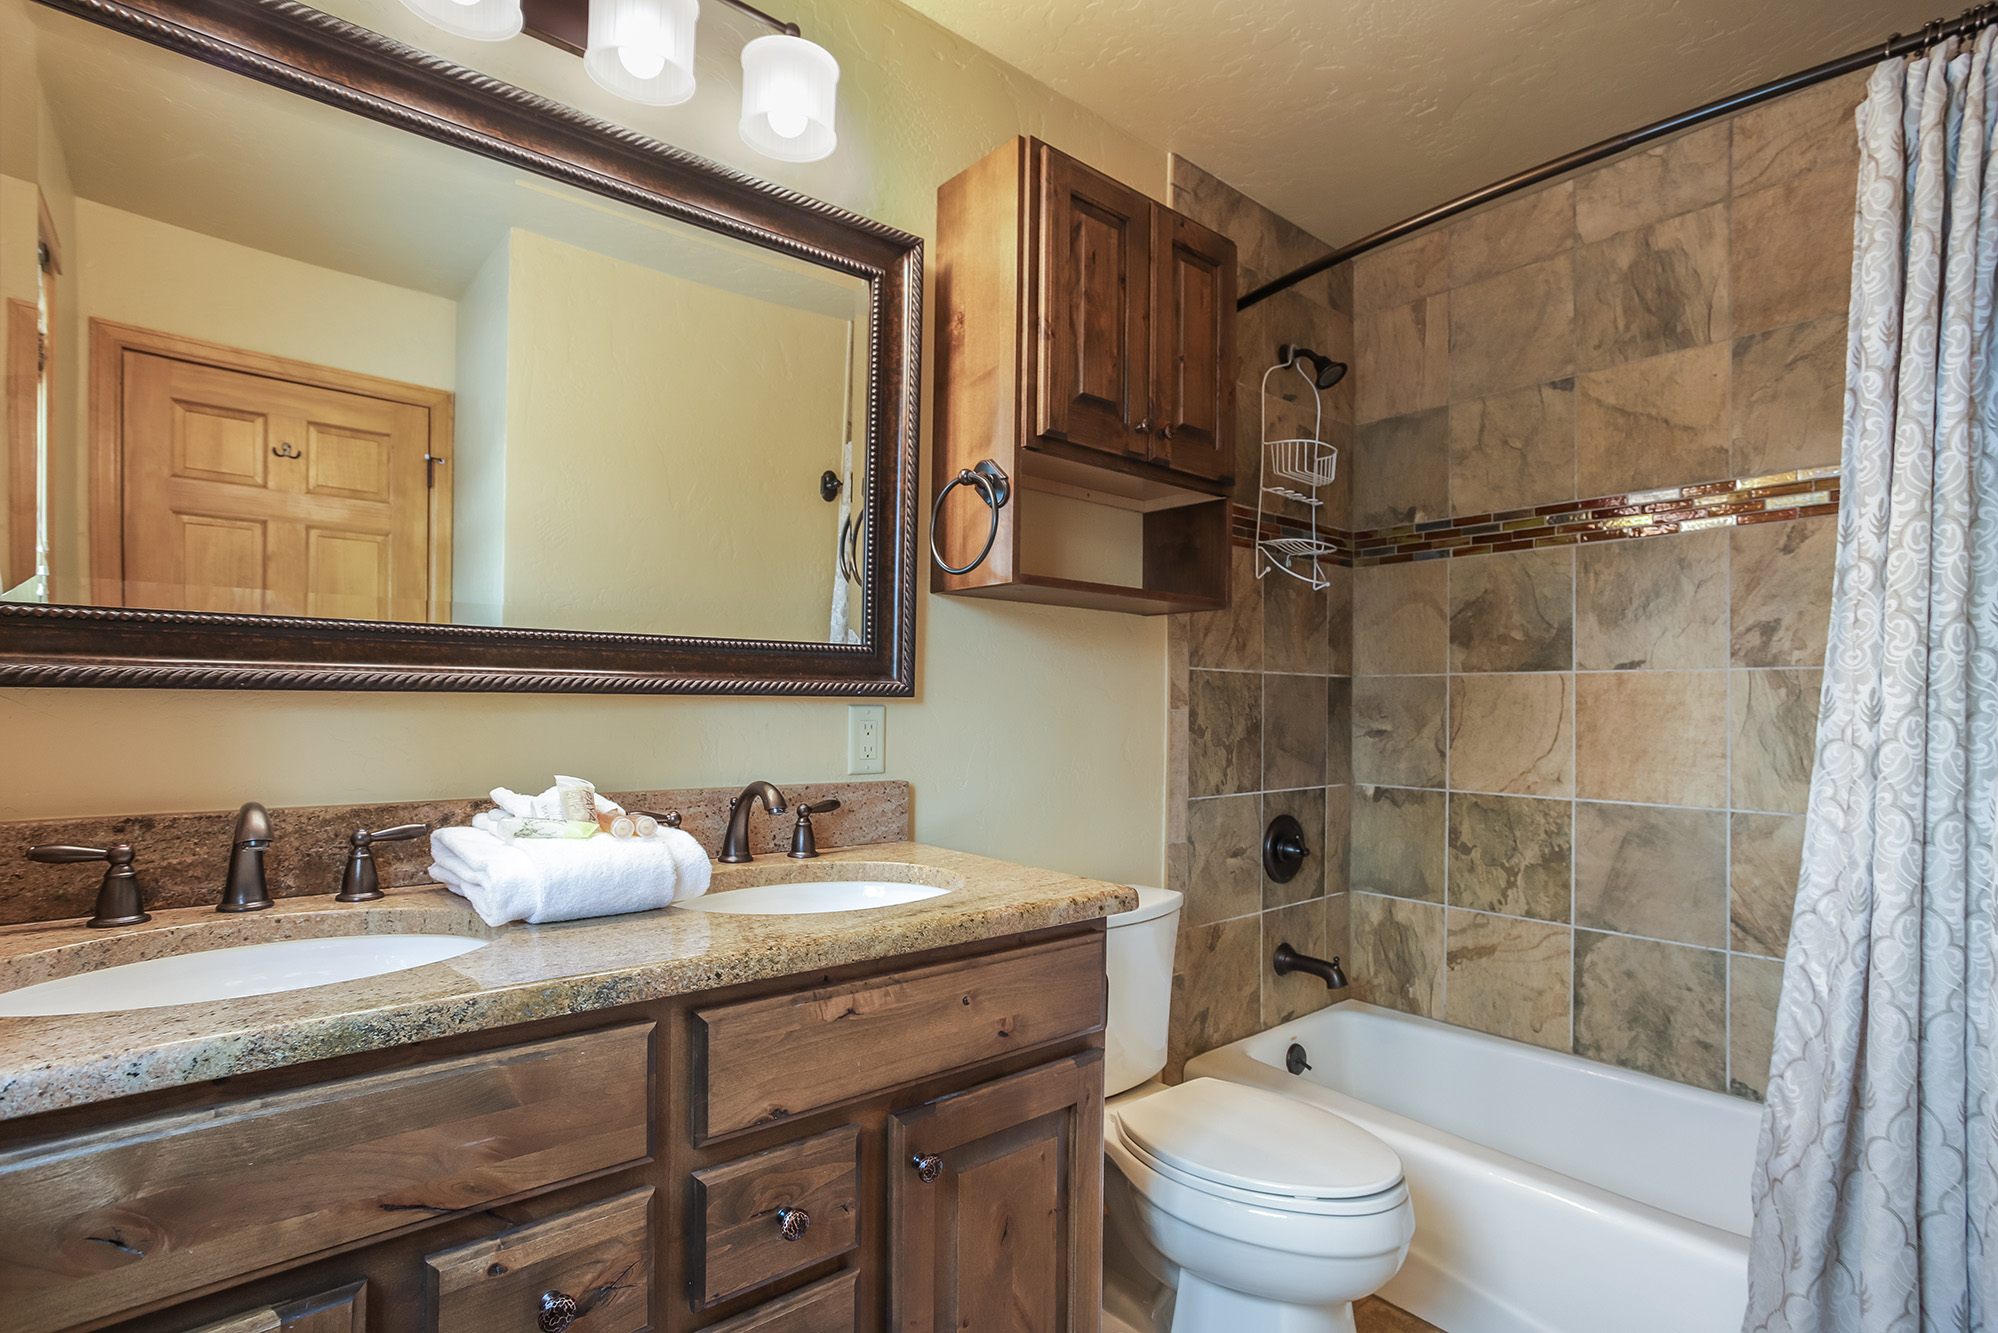 King bathroom with 2 sinks - Friendly Fox Chalet - Breckenridge vacation rental